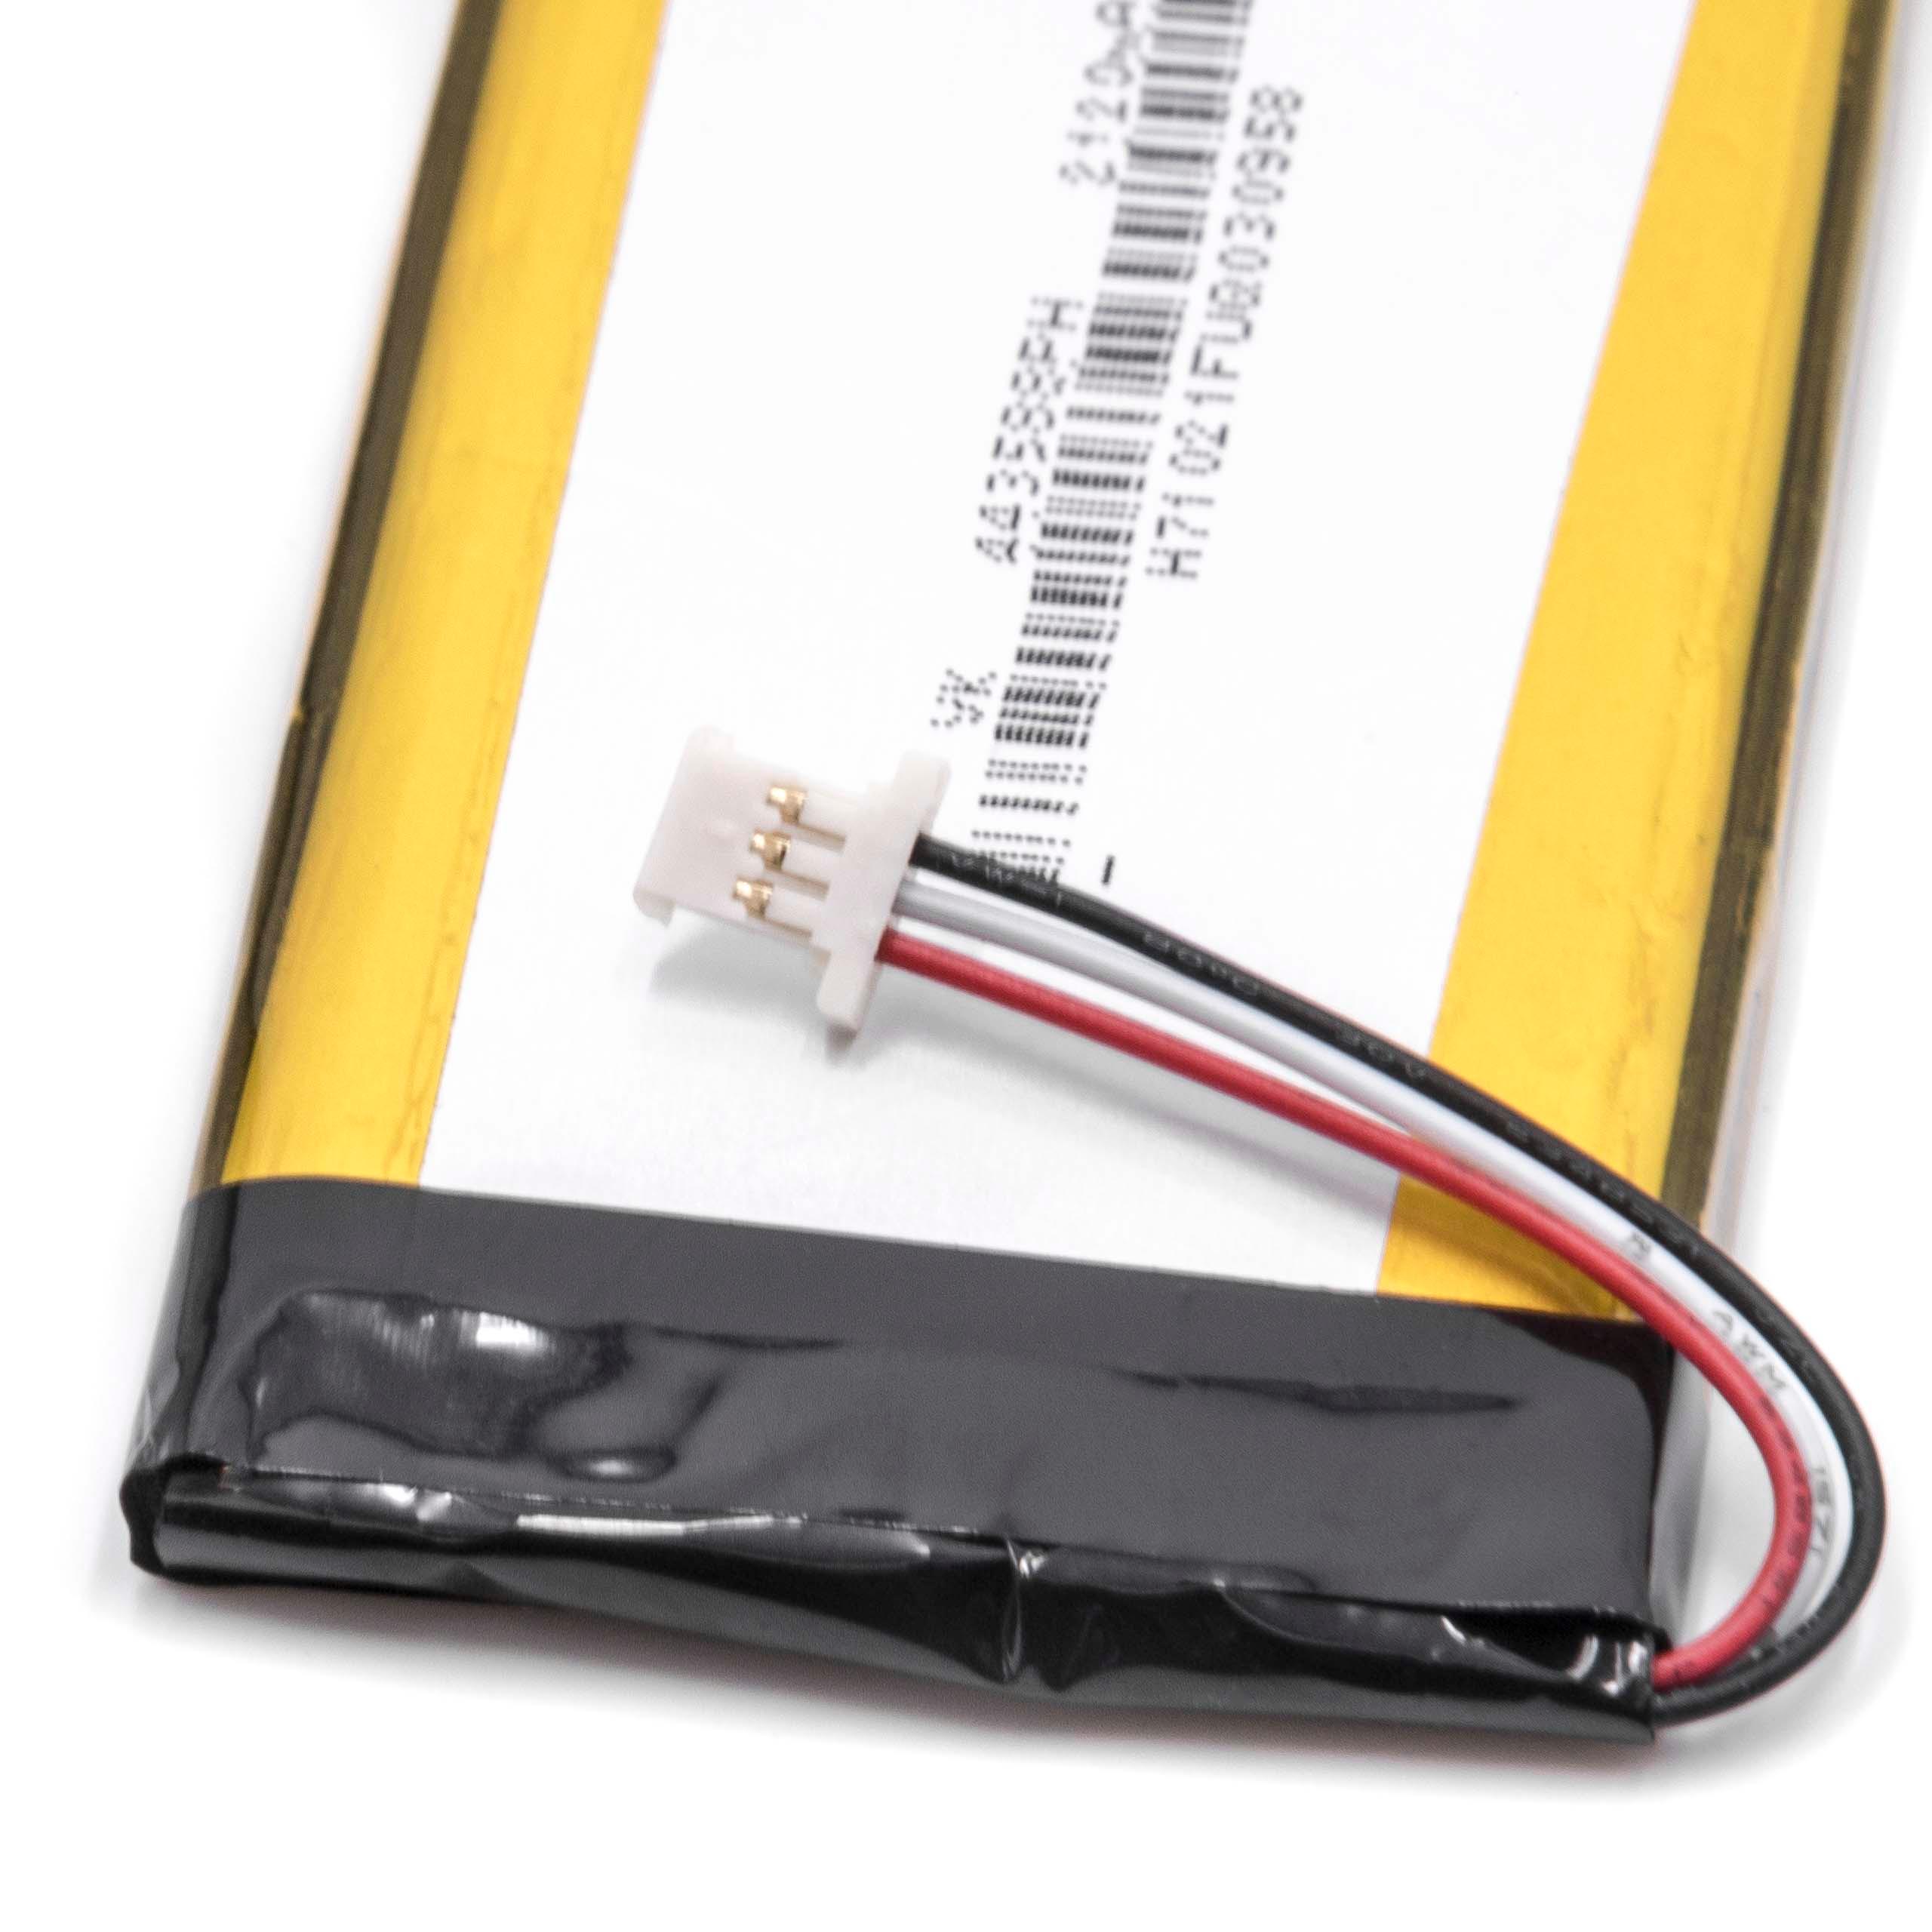 Batterie remplace Becker SR3840100, 334432602678 pour navigation GPS - 1550mAh 3,7V Li-polymère